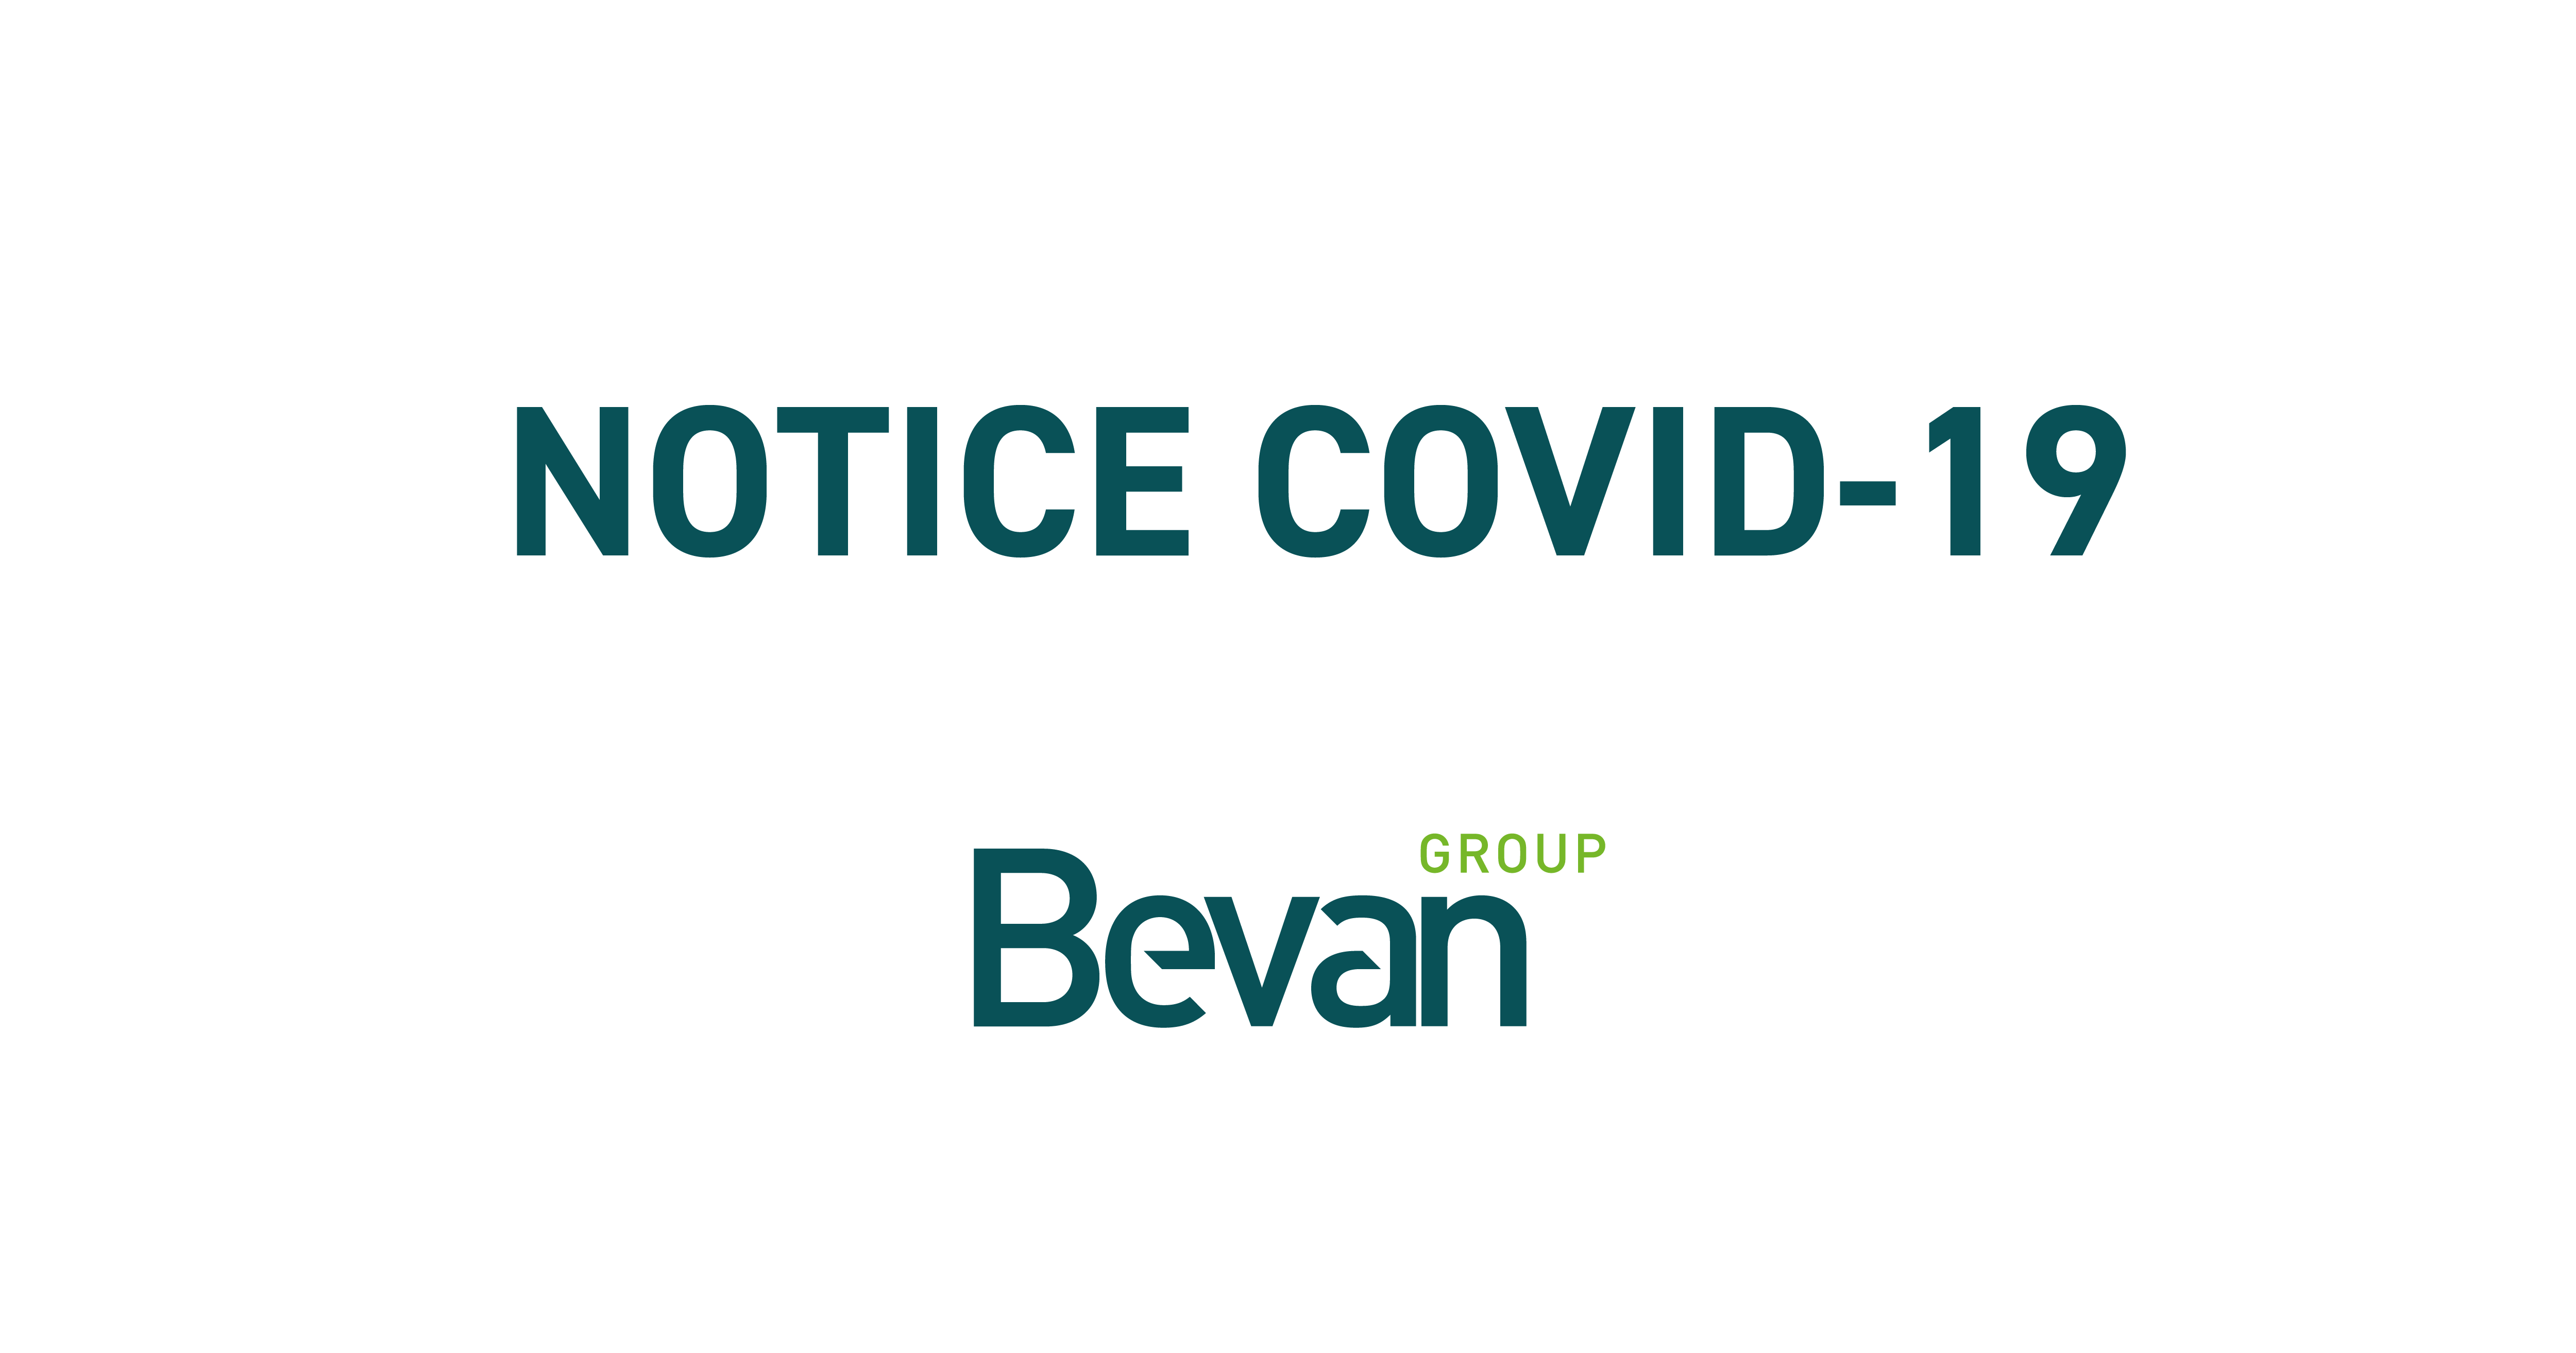 Bevan Group Return to Work Notice COVID19